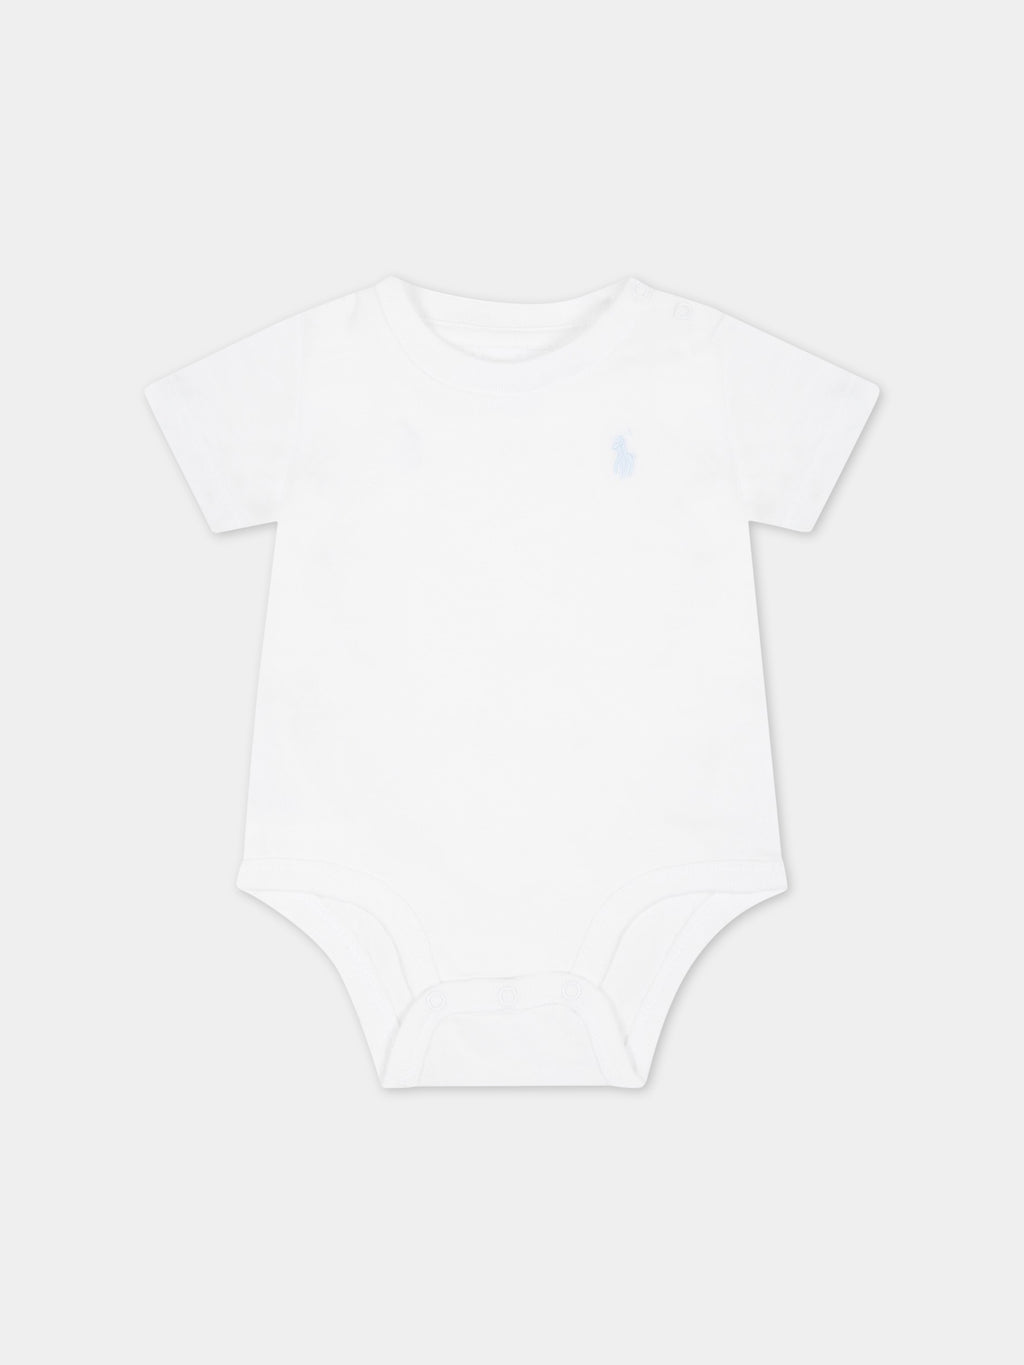 White body for babies with pony logo